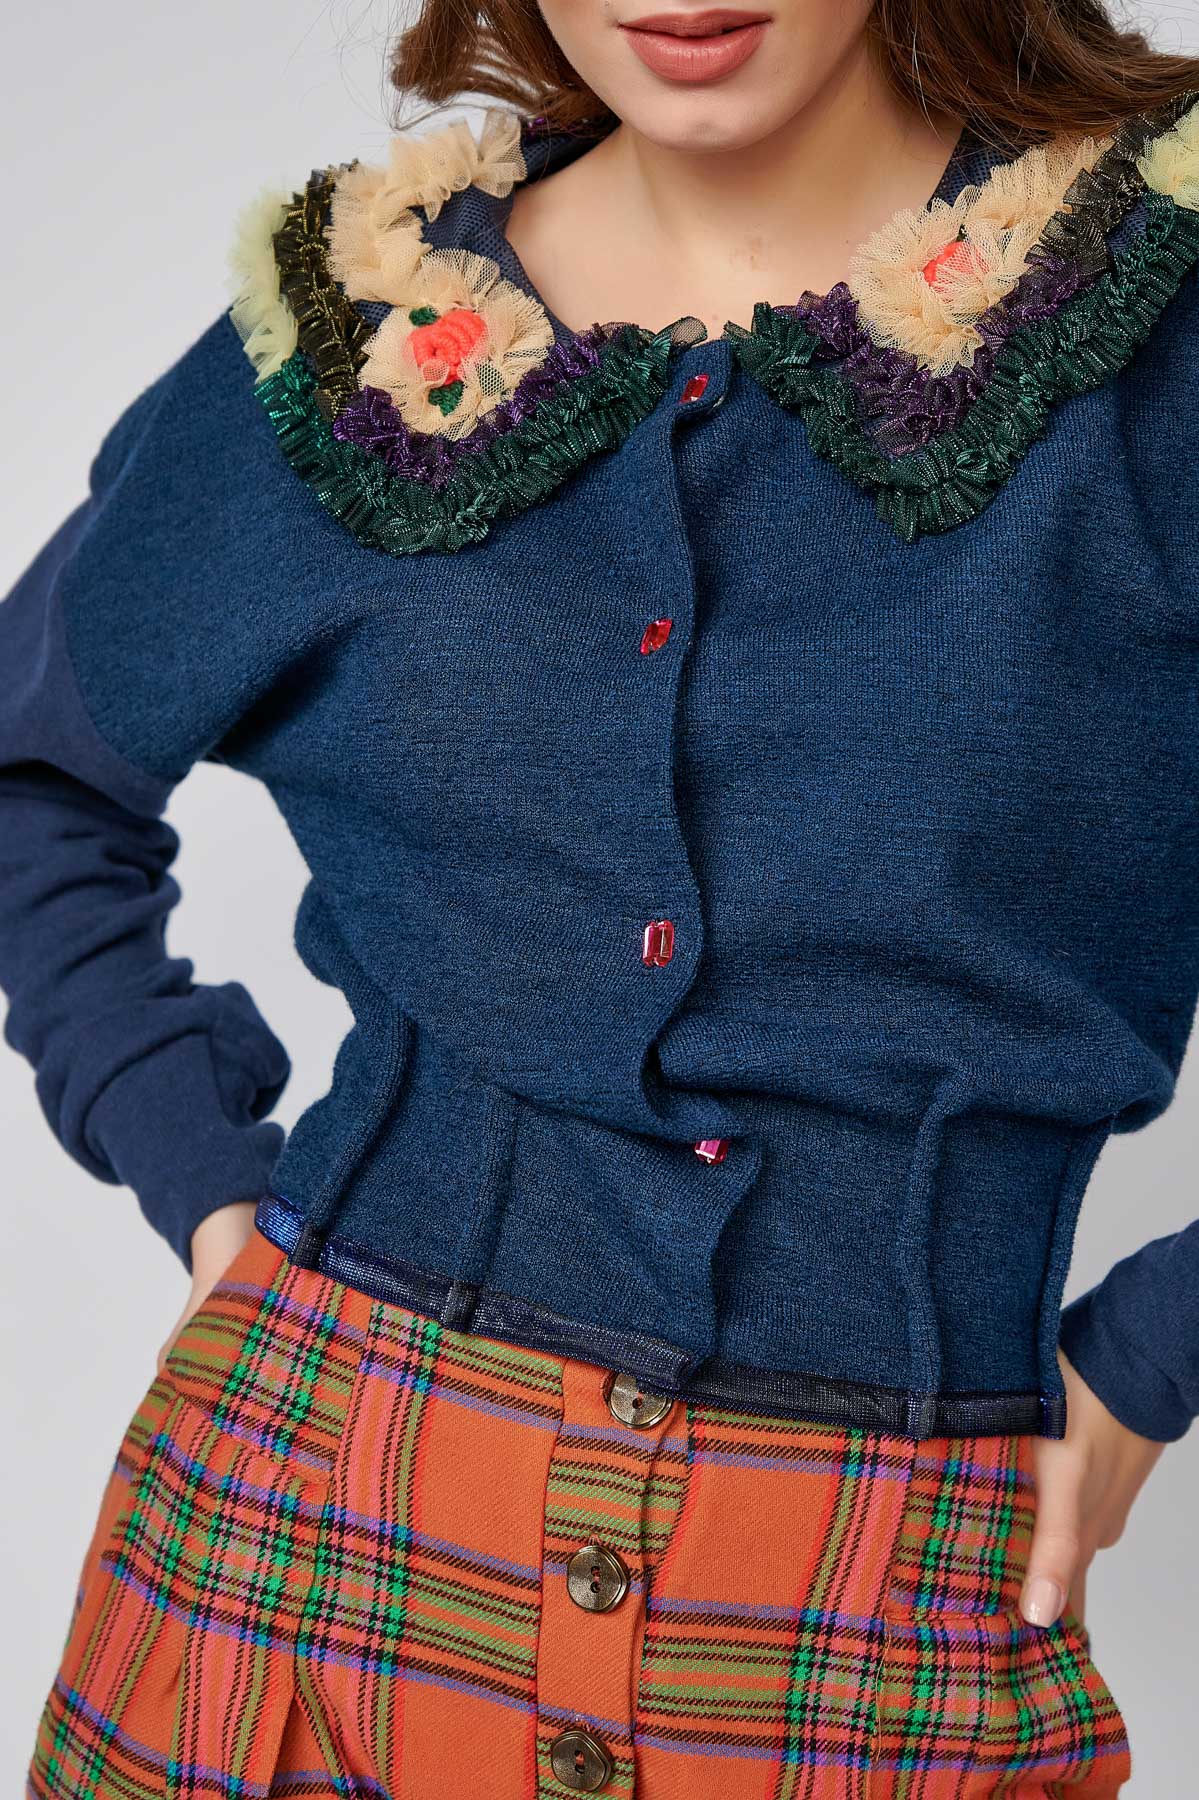 NERA AL Sweater. Natural fabrics, original design, handmade embroidery